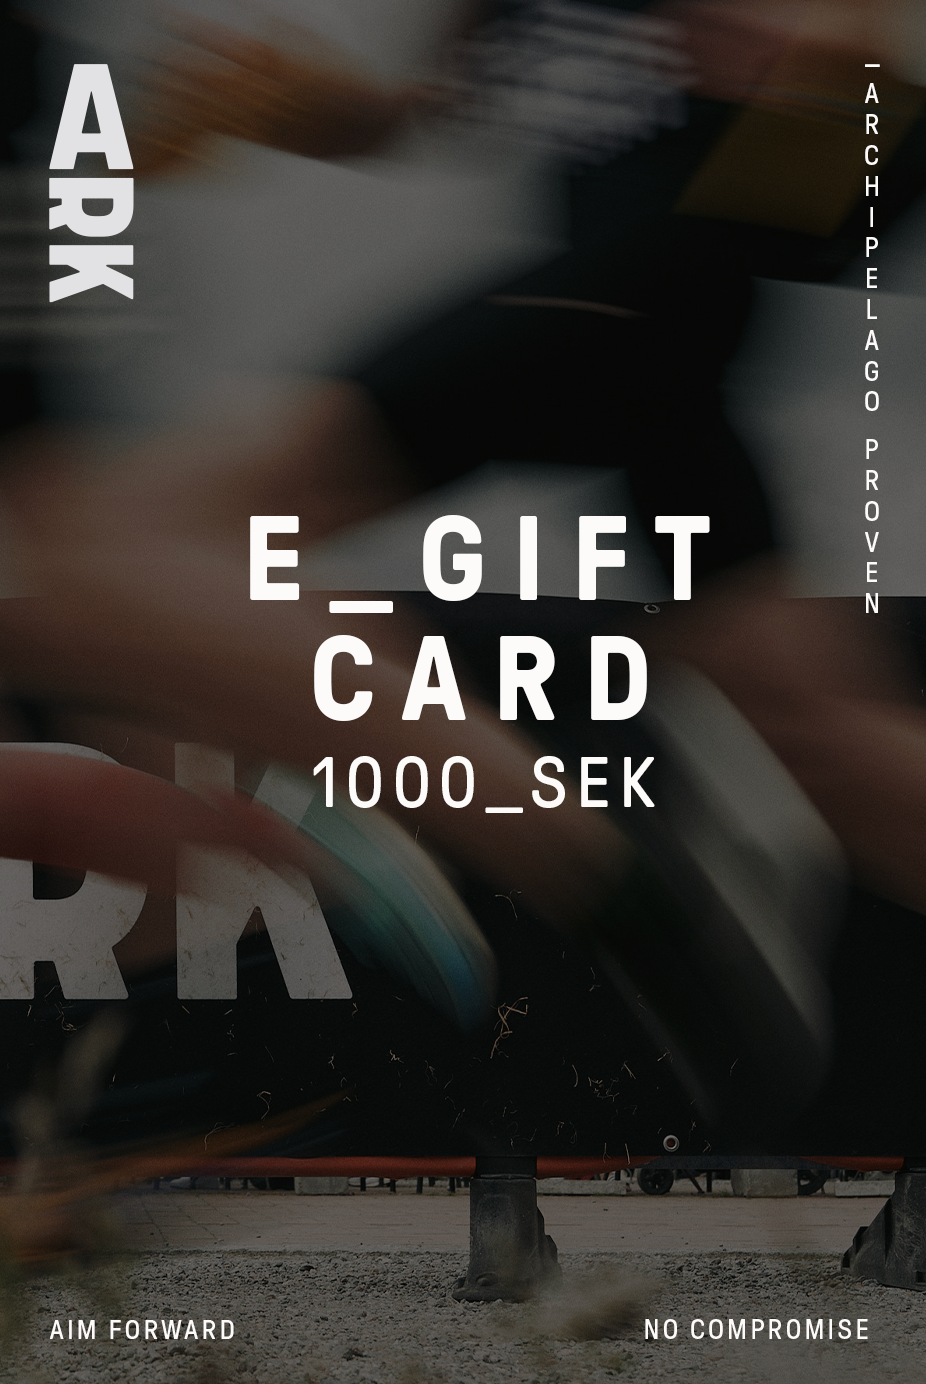 Product photo of ARK Digital Gift Card 1000 SEK